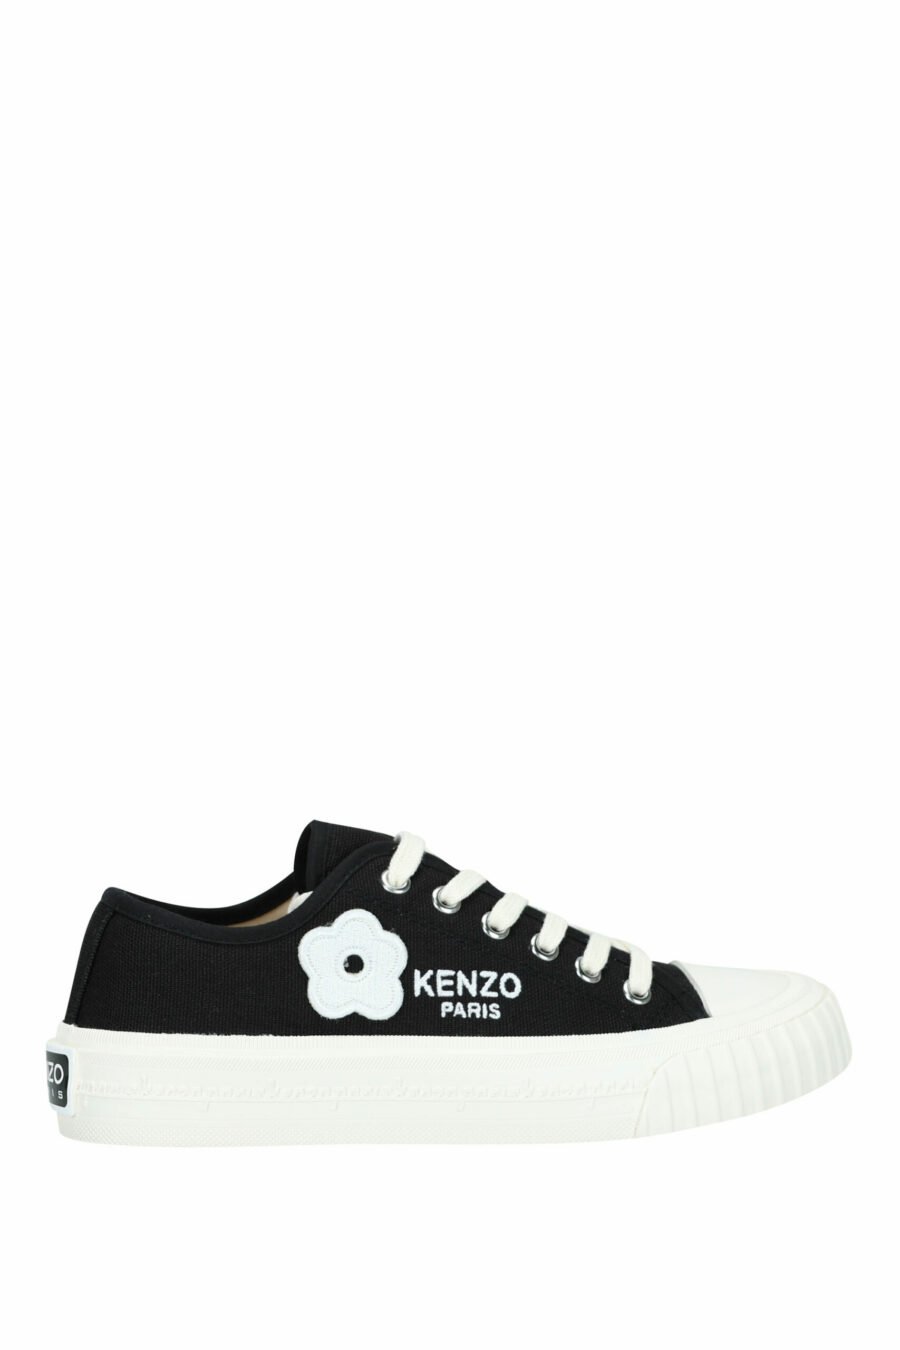 Zapatillas negras "kenzo foxy" con logo "boke flower" blanco - 3612230639430 scaled